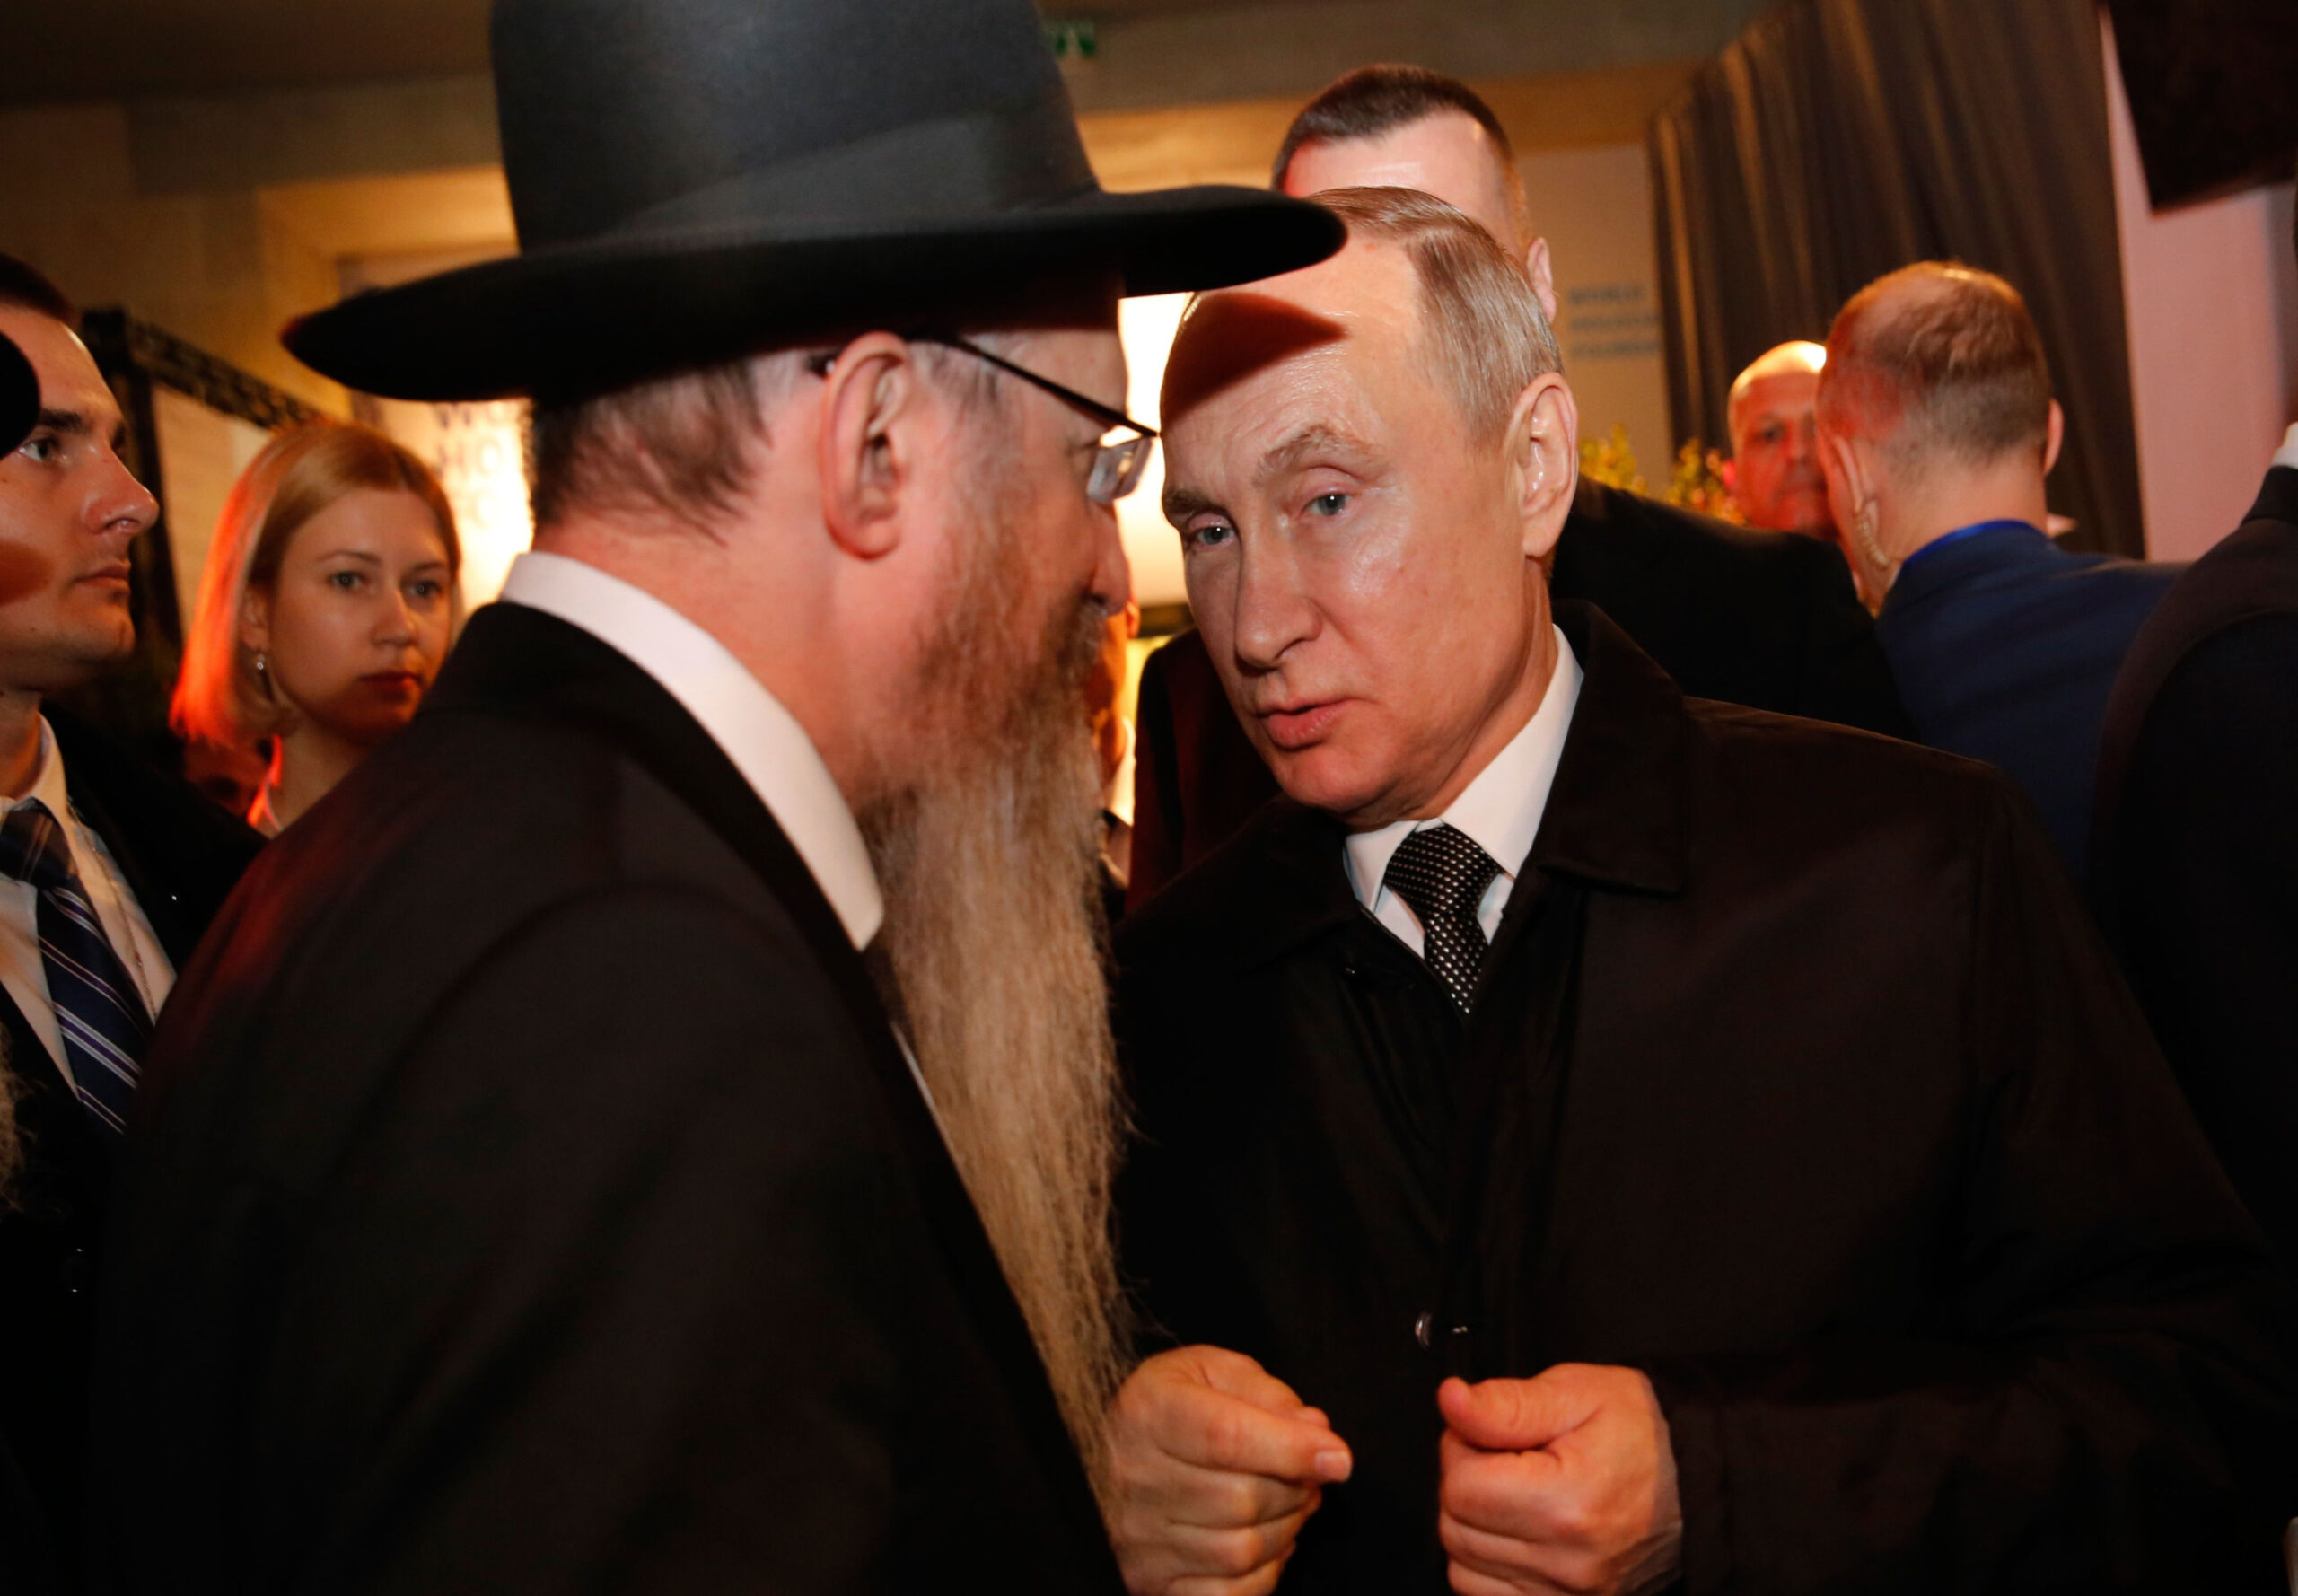 putin whispers with rabbi